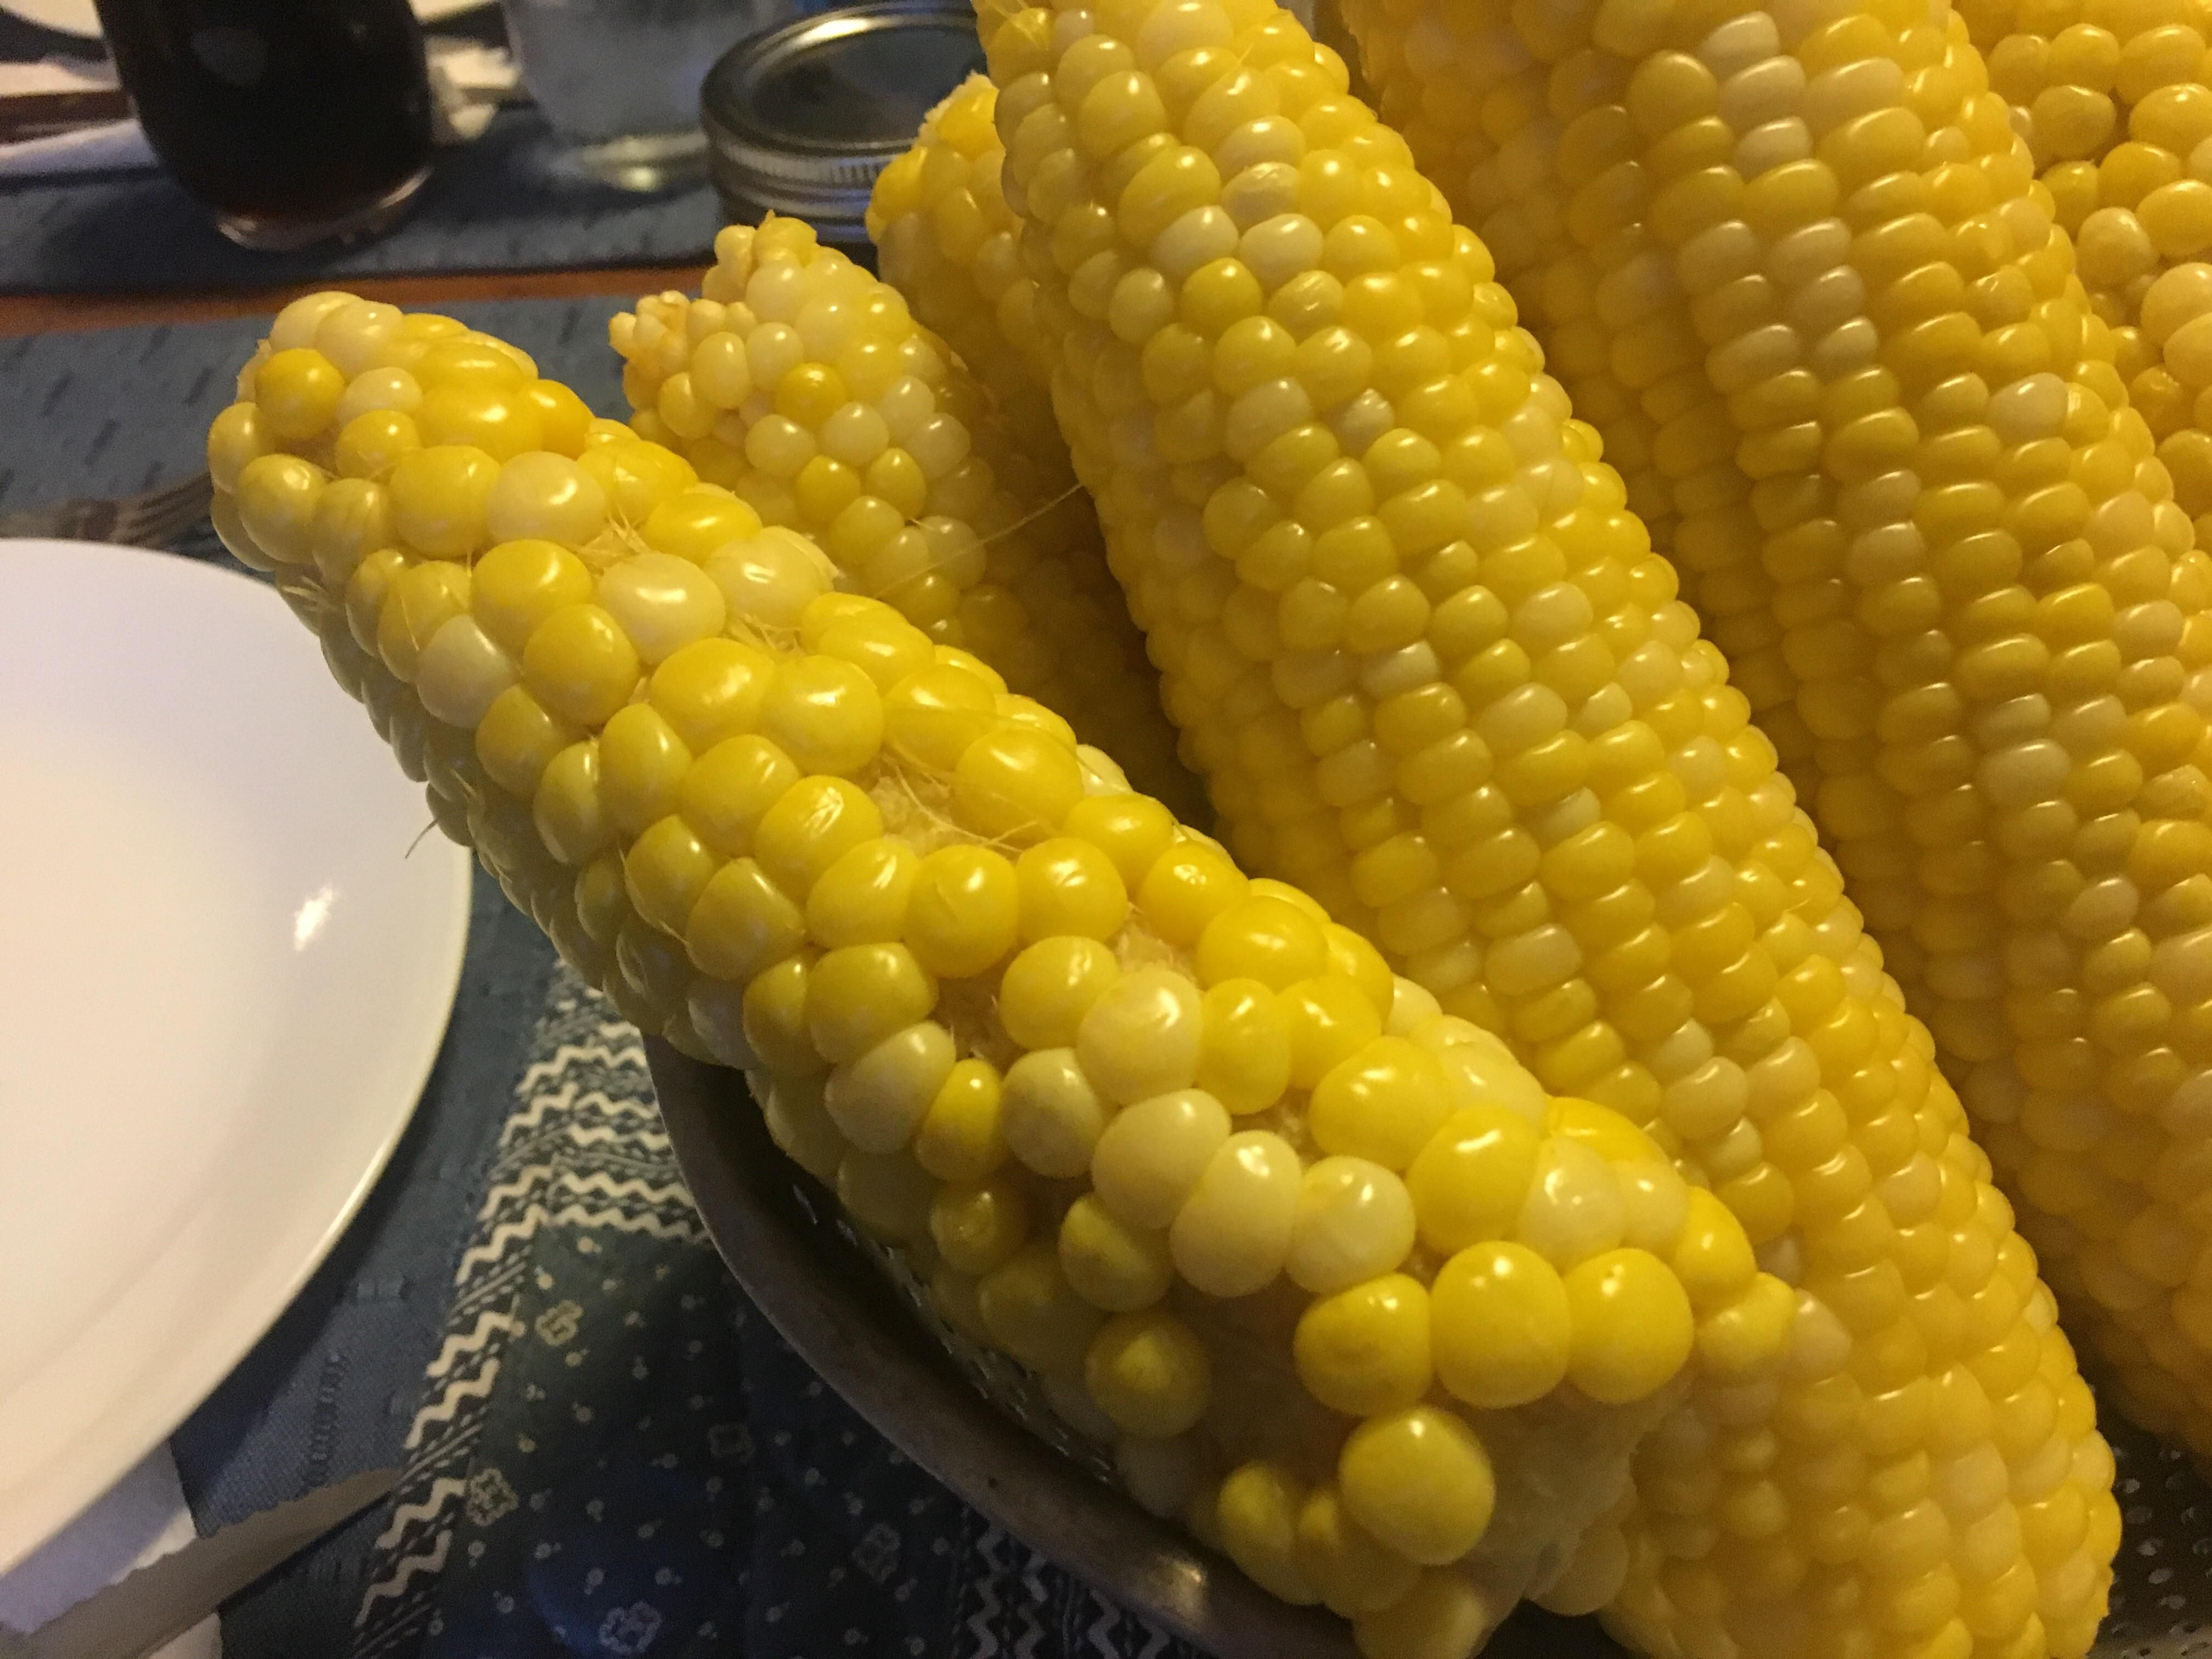 Found the British corn.